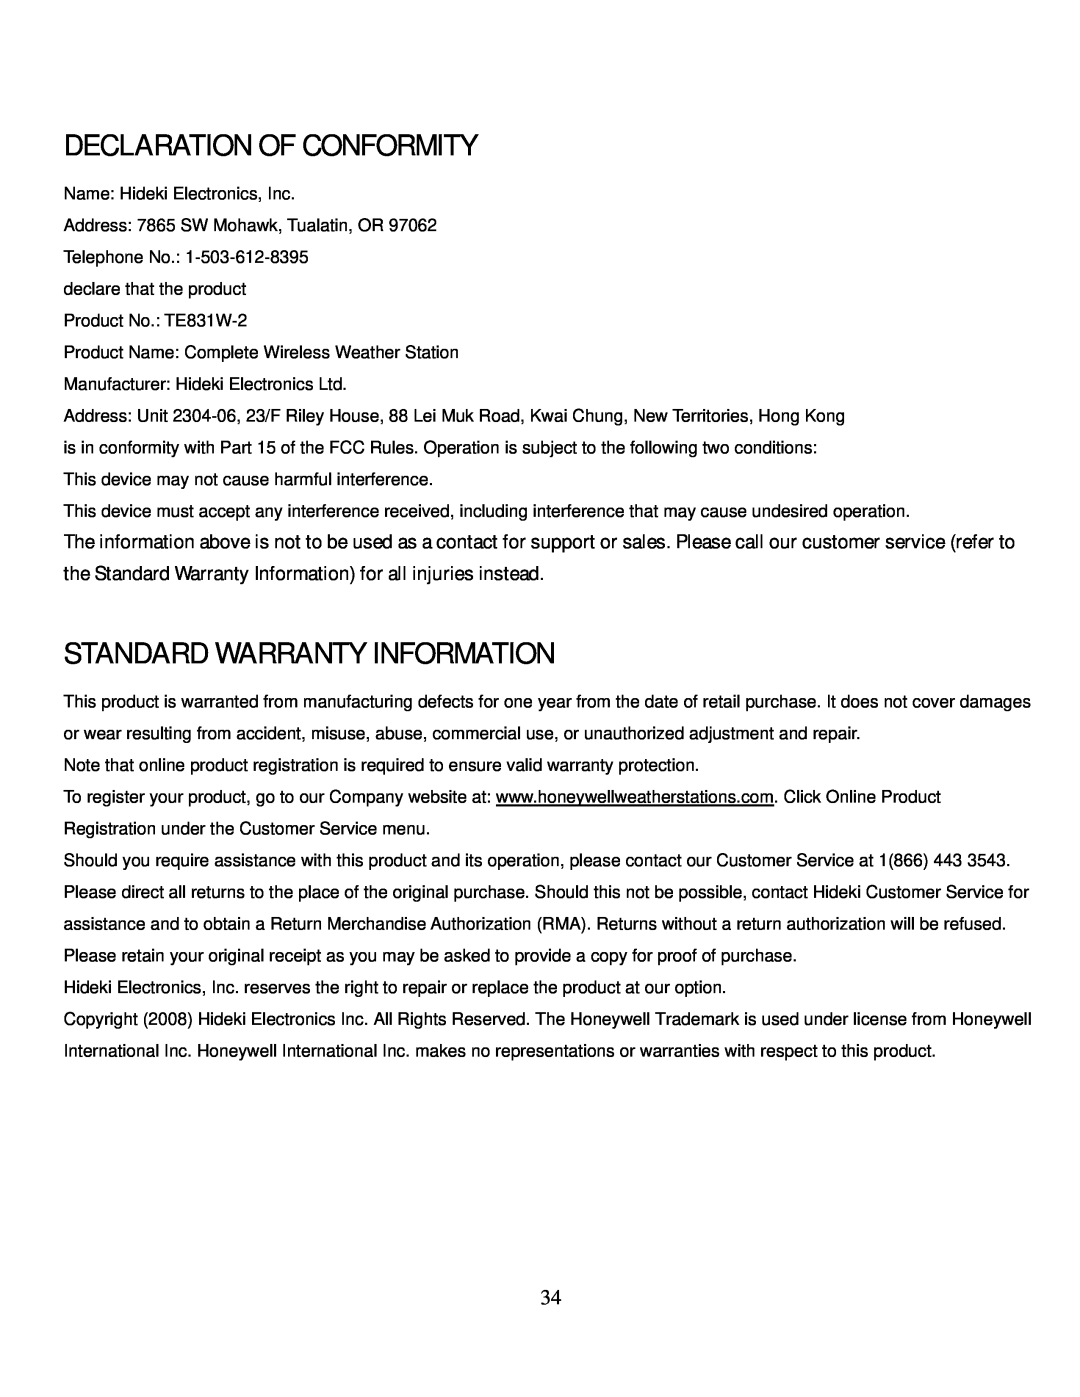 Honeywell TE831W-2 user manual Declaration Of Conformity, Standard Warranty Information 